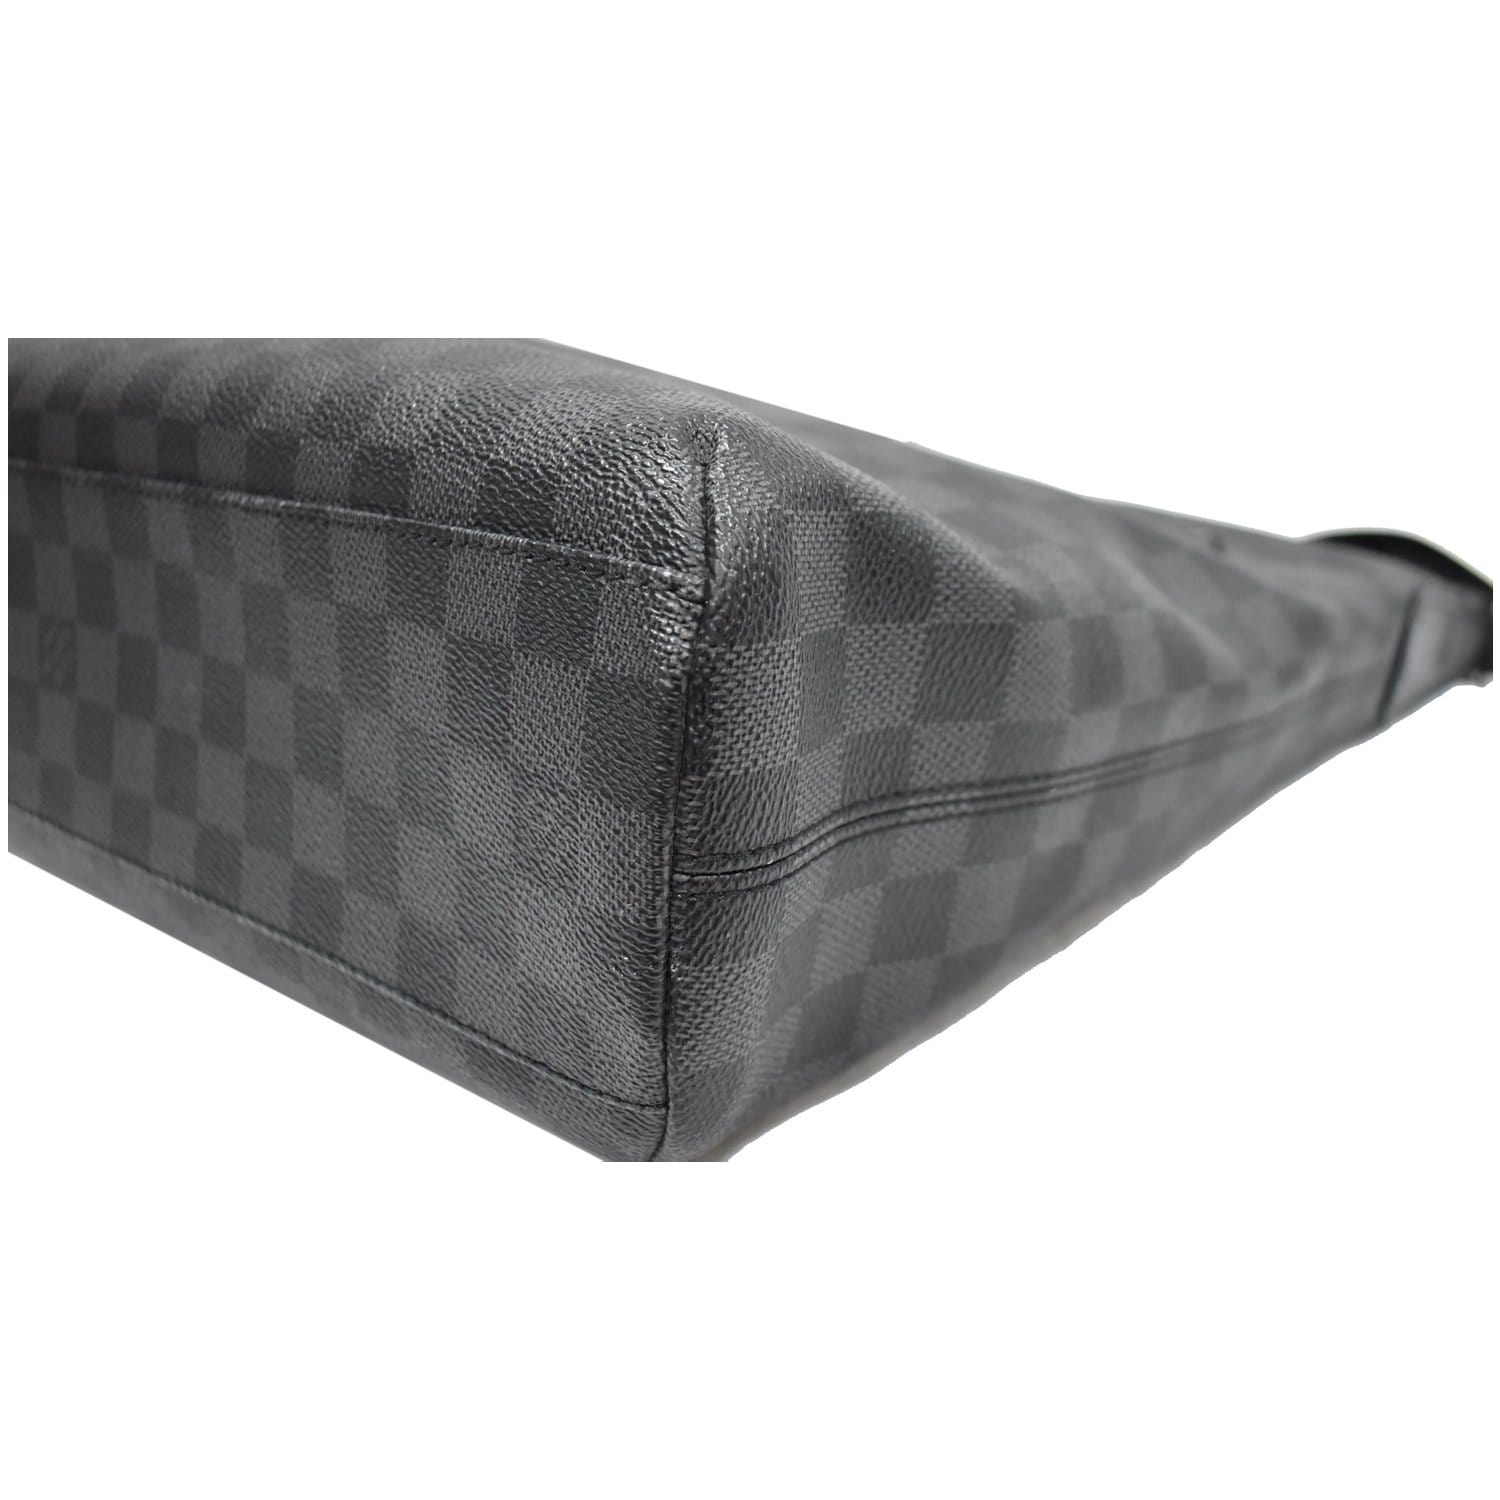 Black Louis Vuitton Damier Graphite Mick PM Crossbody Bag